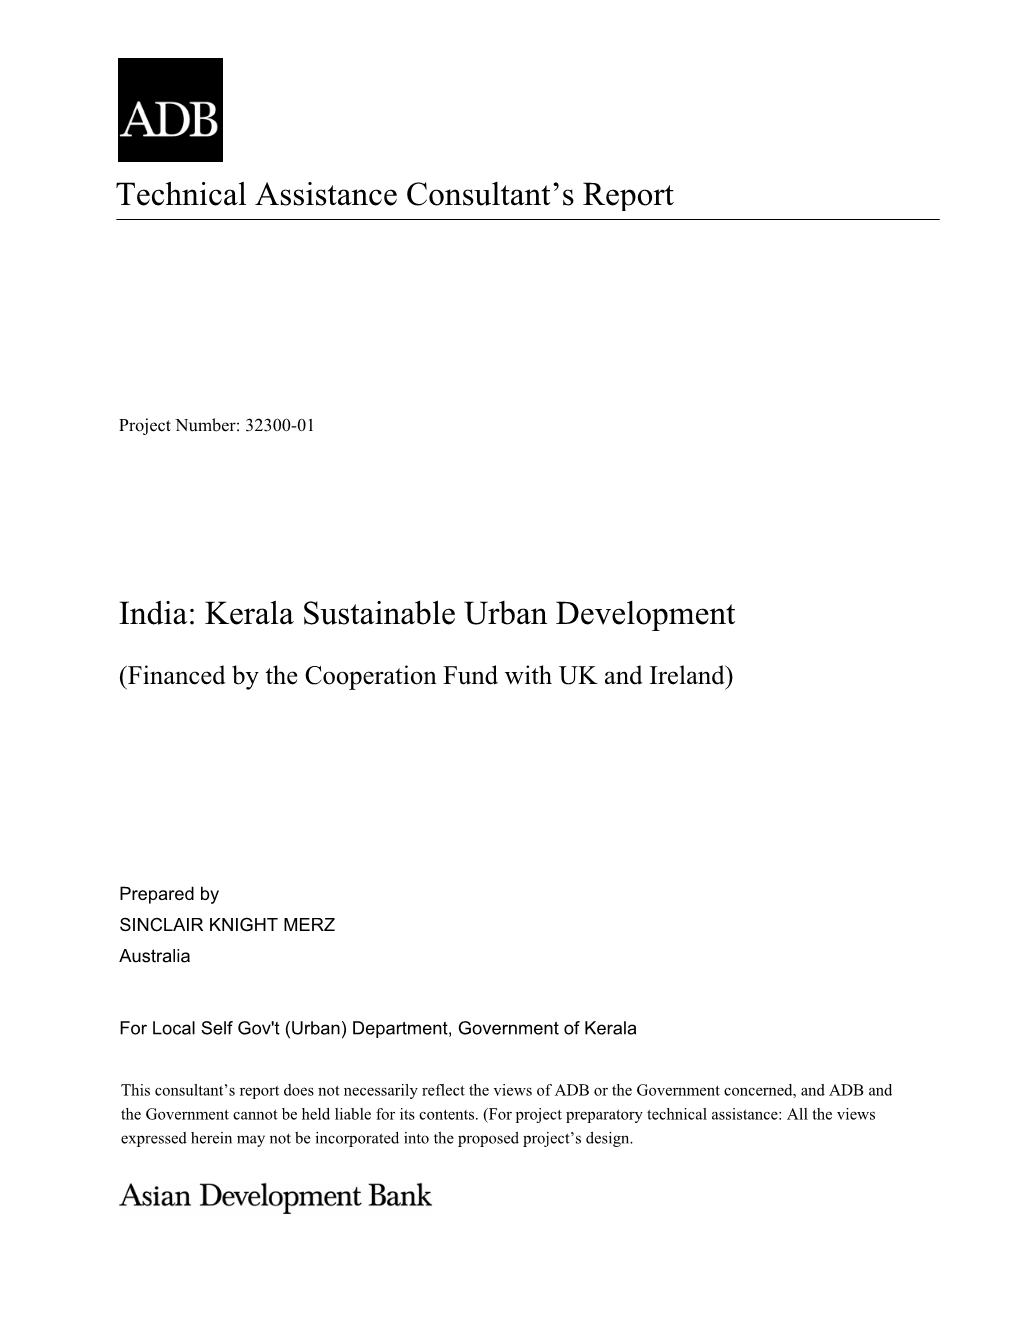 Kerala Sustainable Urban Development